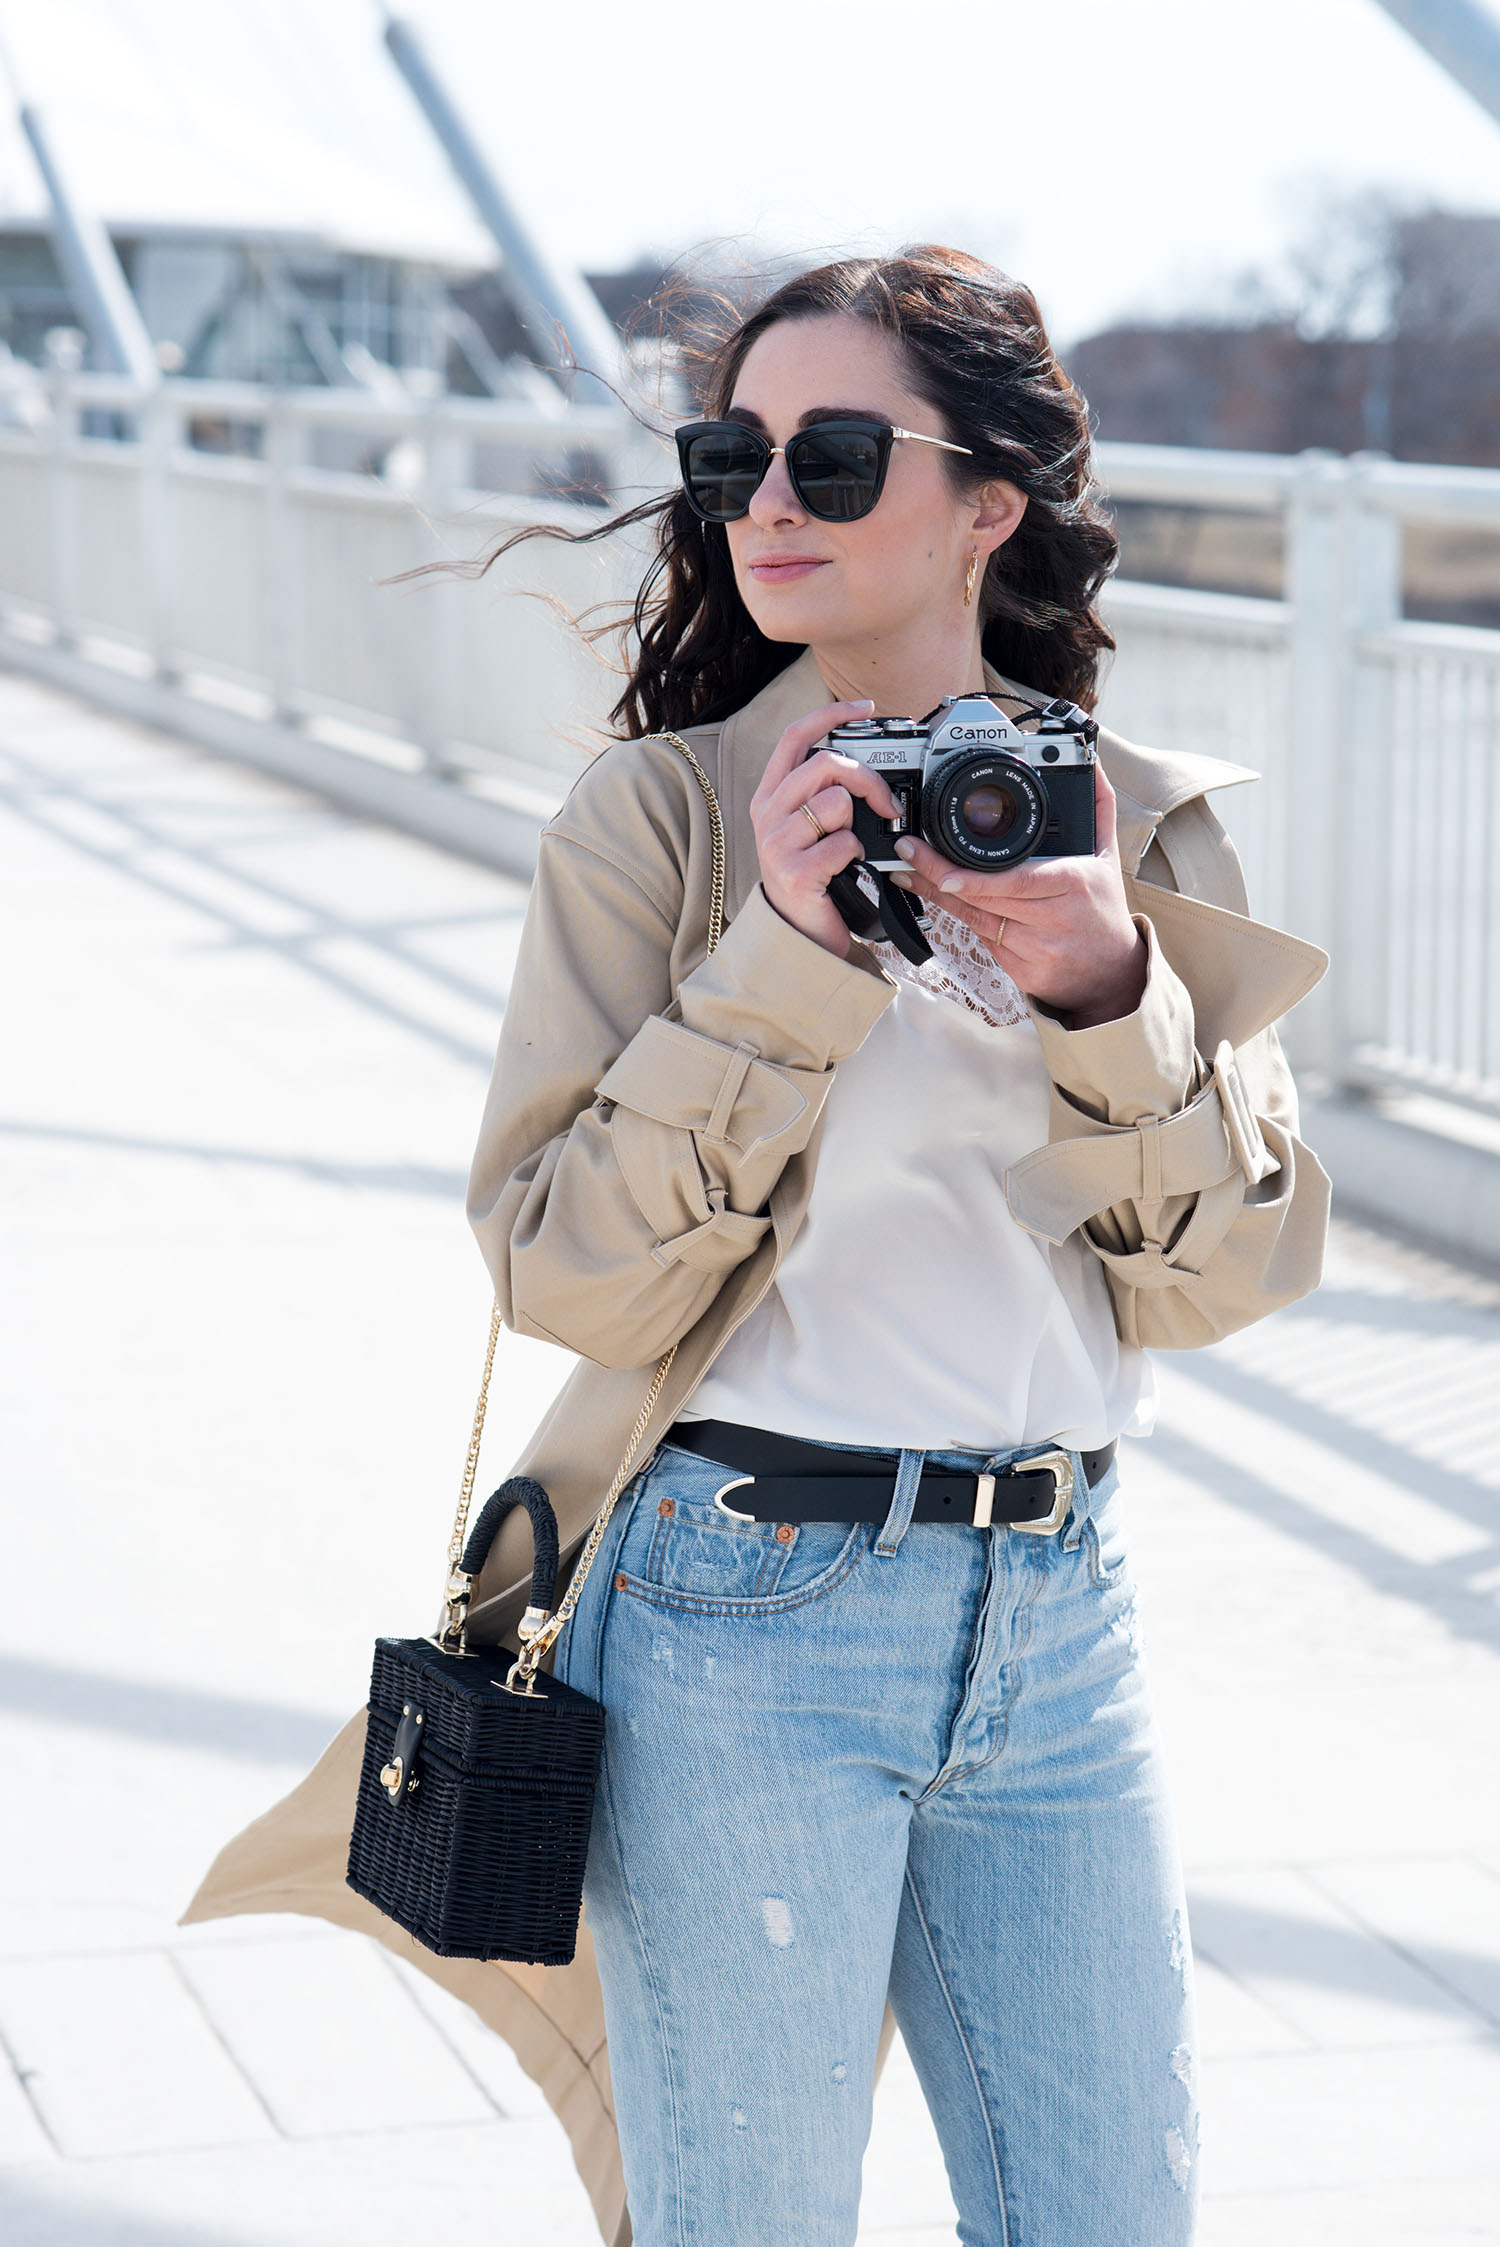 Portrait of Canadian fashion blogger Cee Fardoe of Coco & Vera wearing Le Specs sunglasses and holding a vintage Canon camera